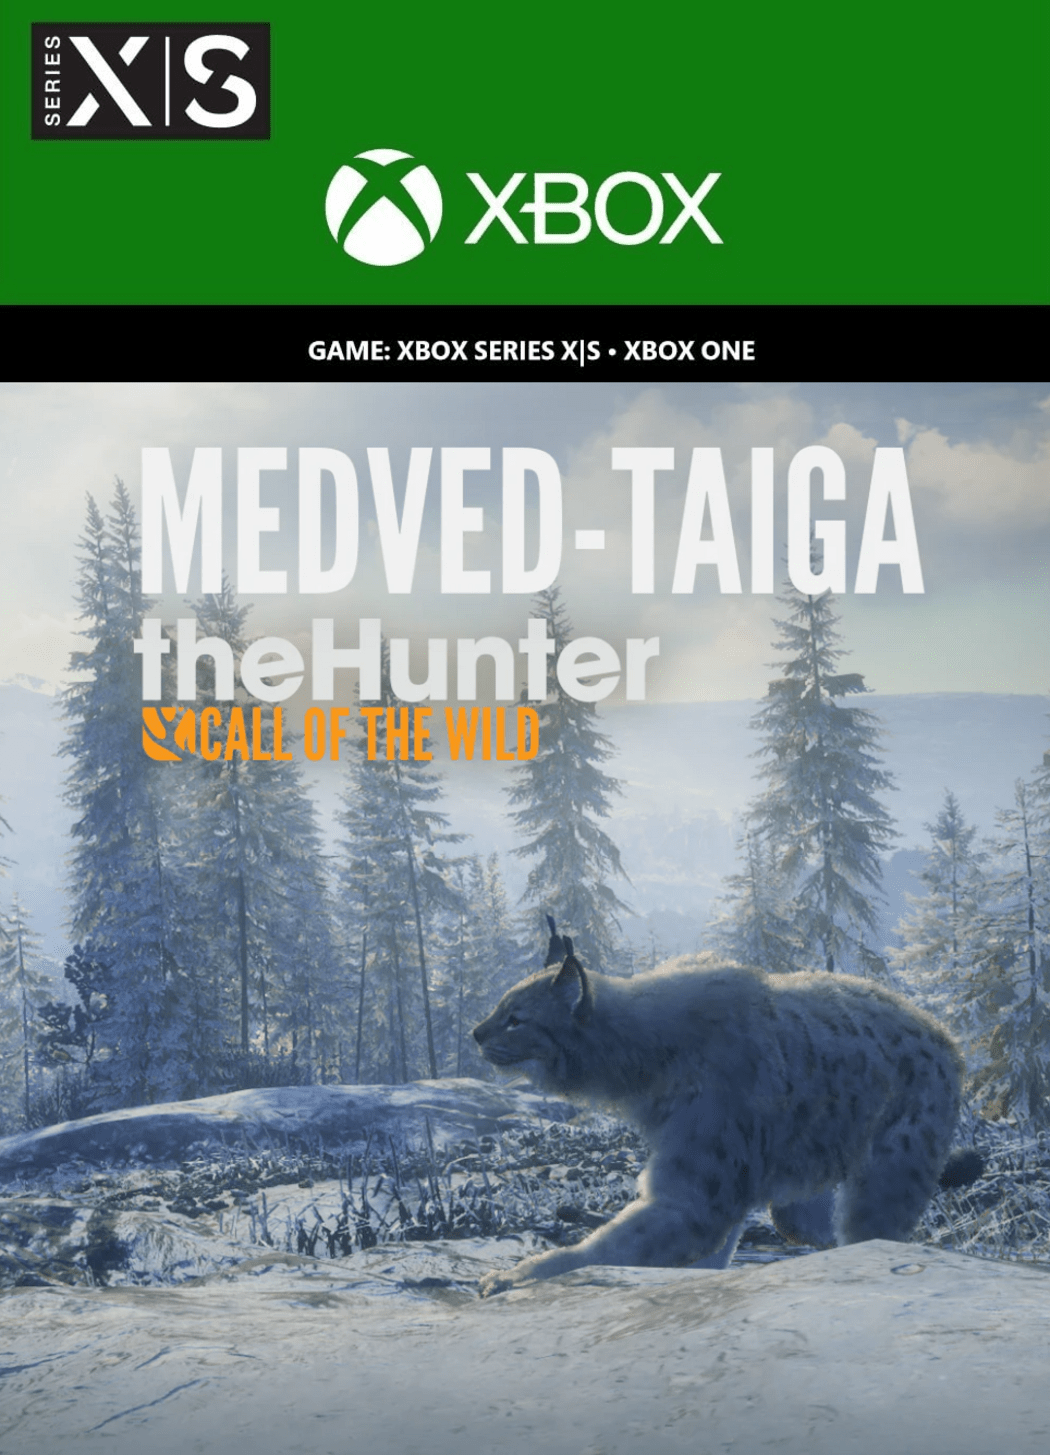 Buy The Hunter: Call of the Wild Xbox Key Cheaper!